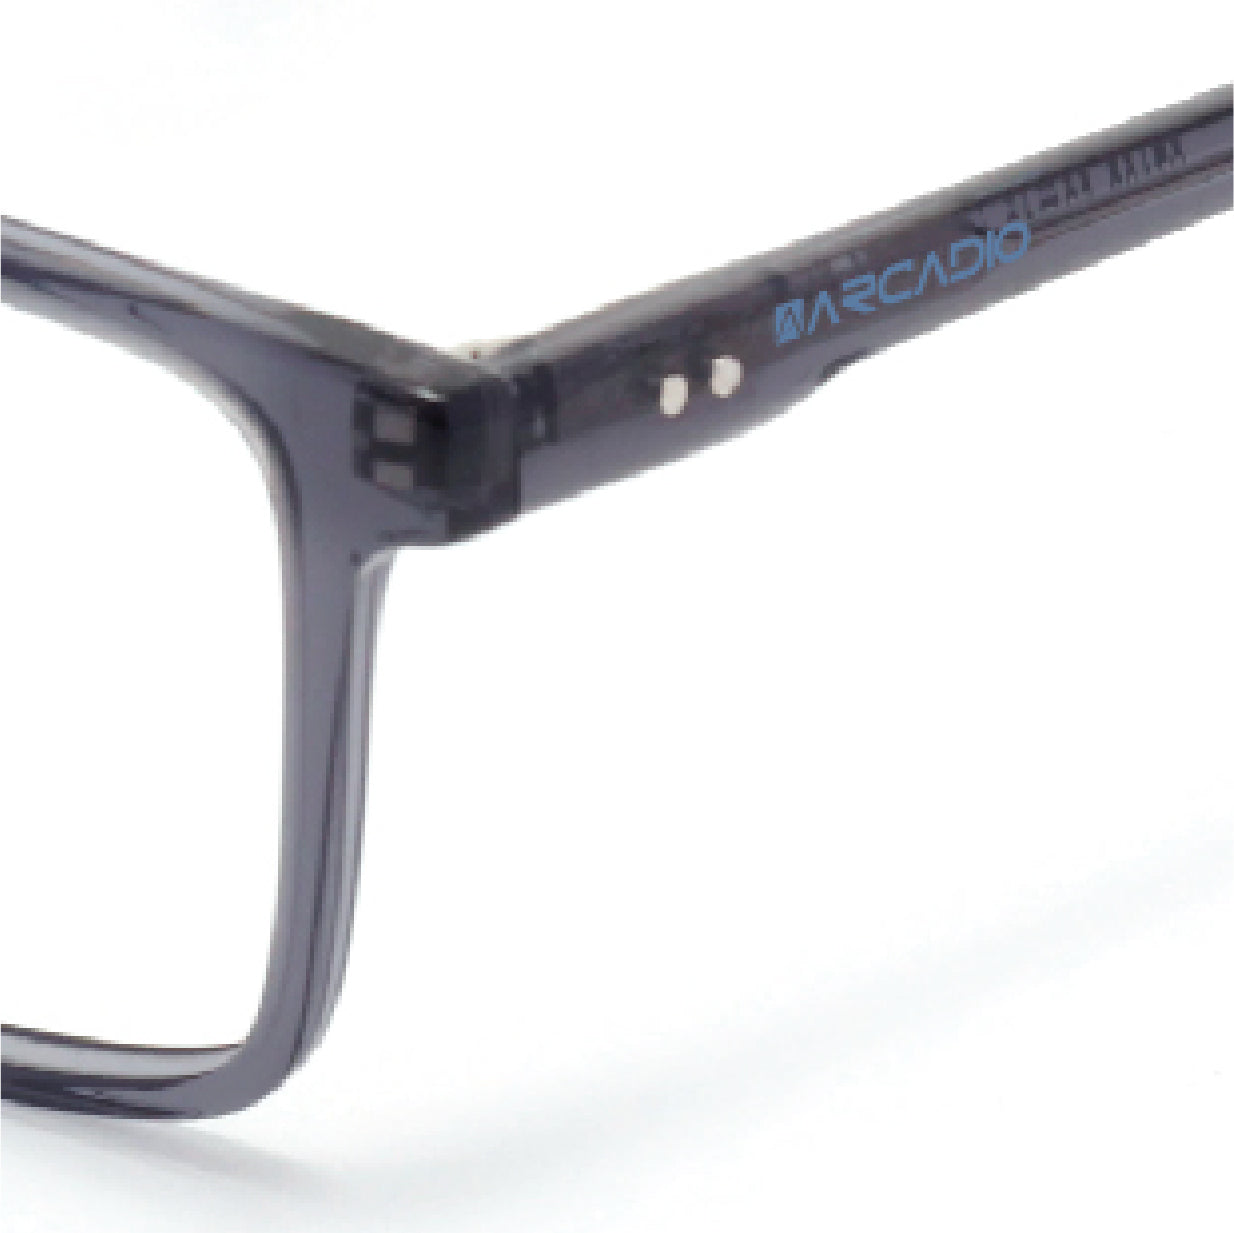 COOPER Ubran Everyday Eyeglass SF4490 ARCADIO